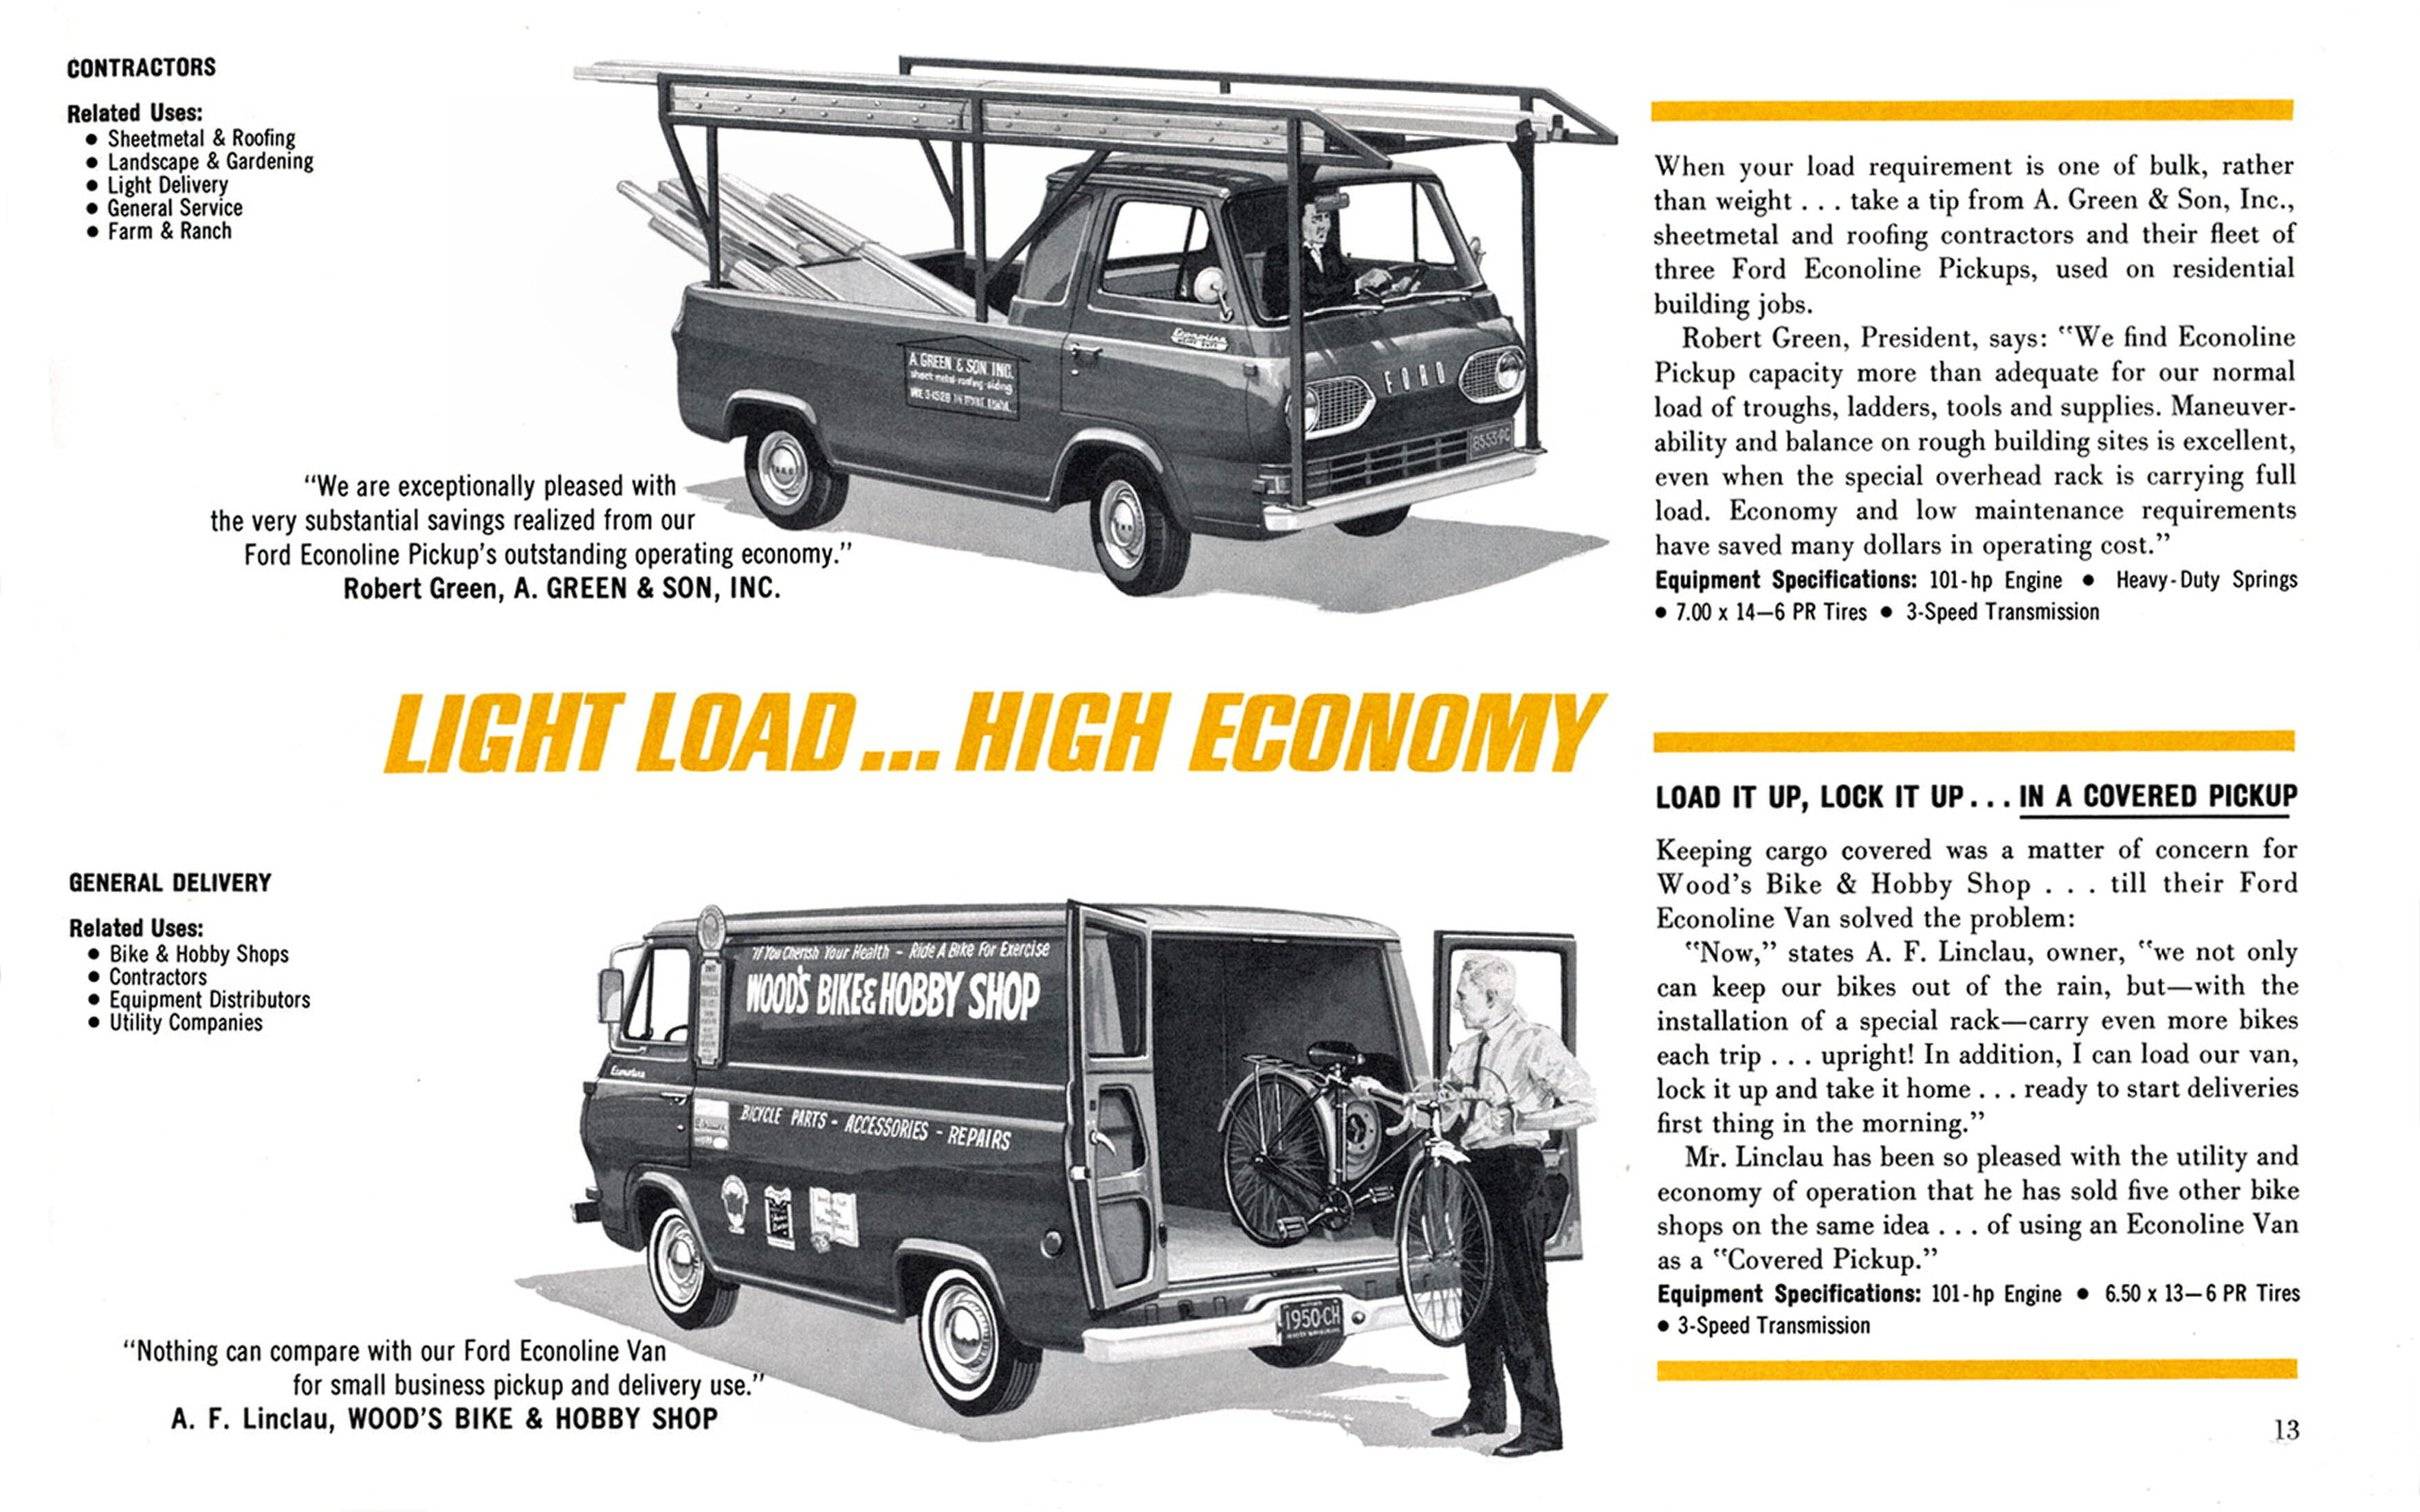 1964 Ford Pickup Trucks-13